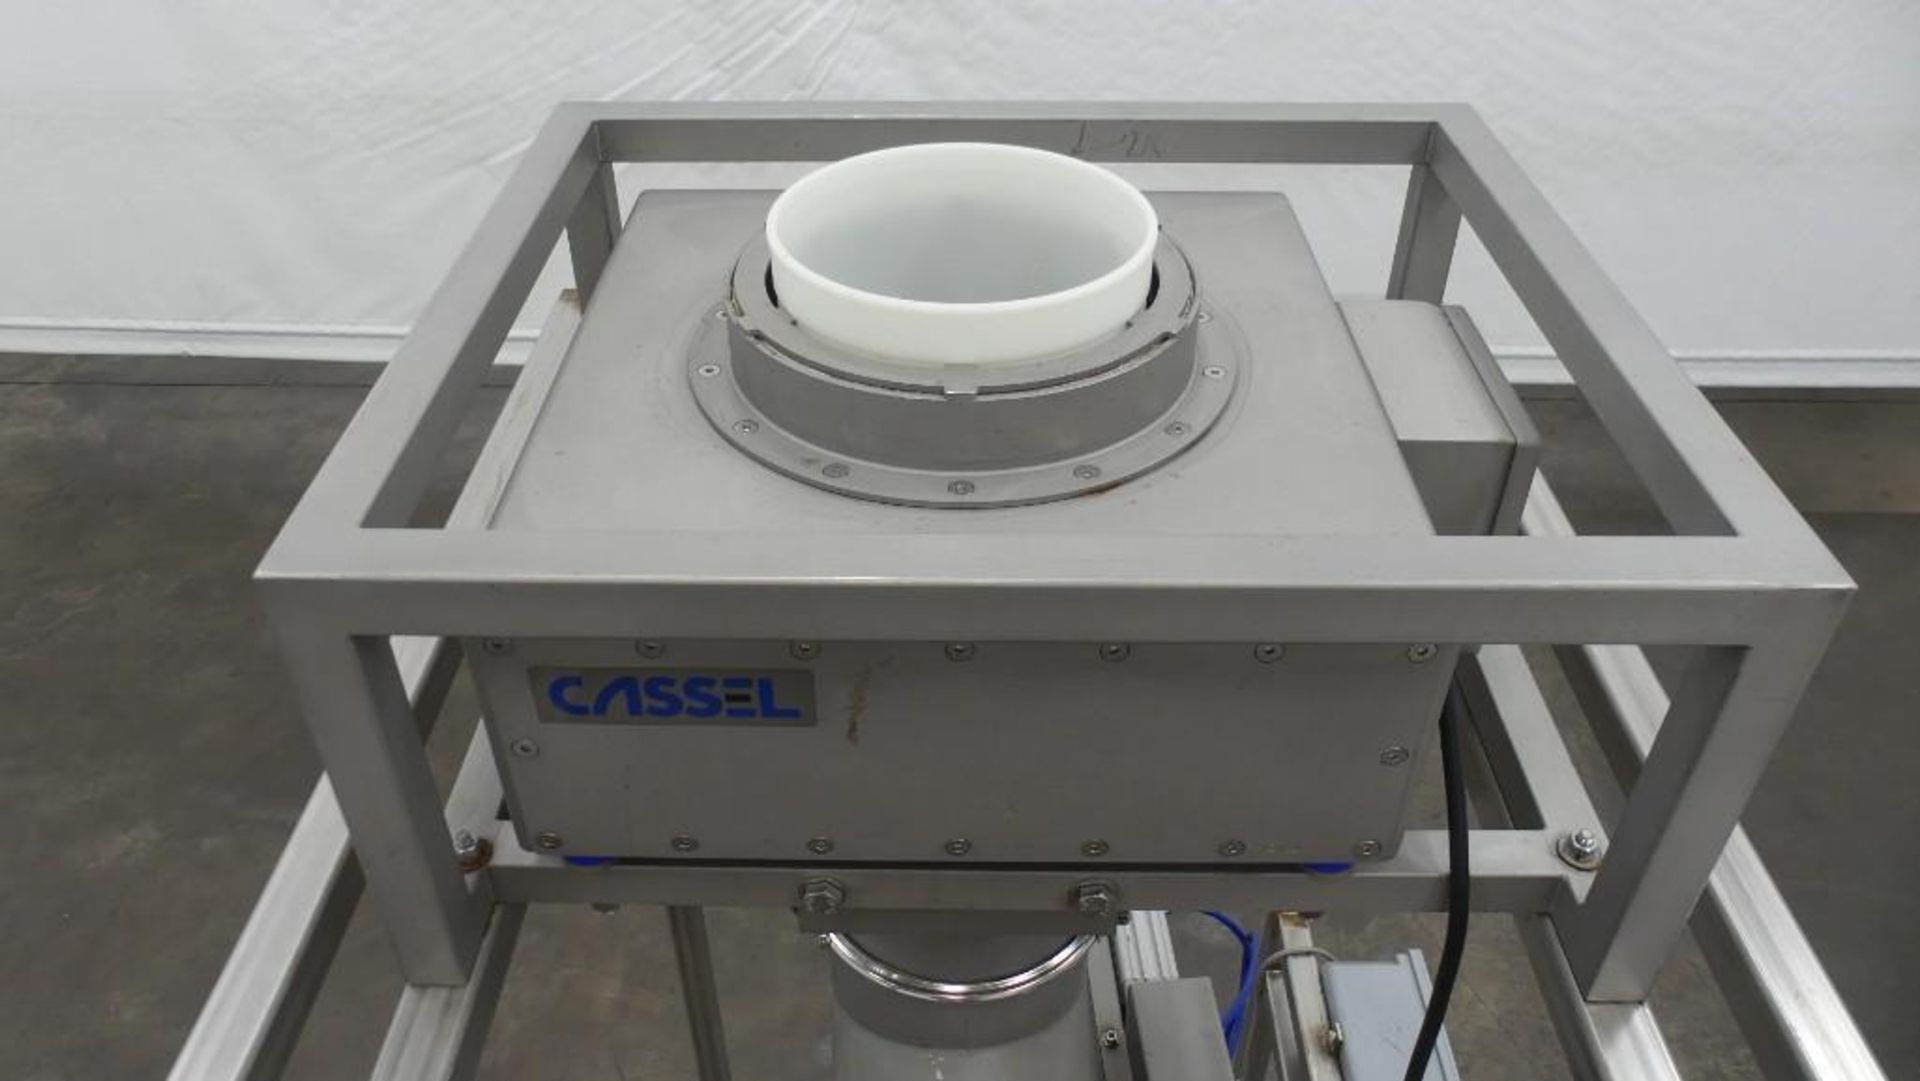 Cassel Shark GF200c Flow Through Metal Detector 7 3/4" - Image 6 of 9